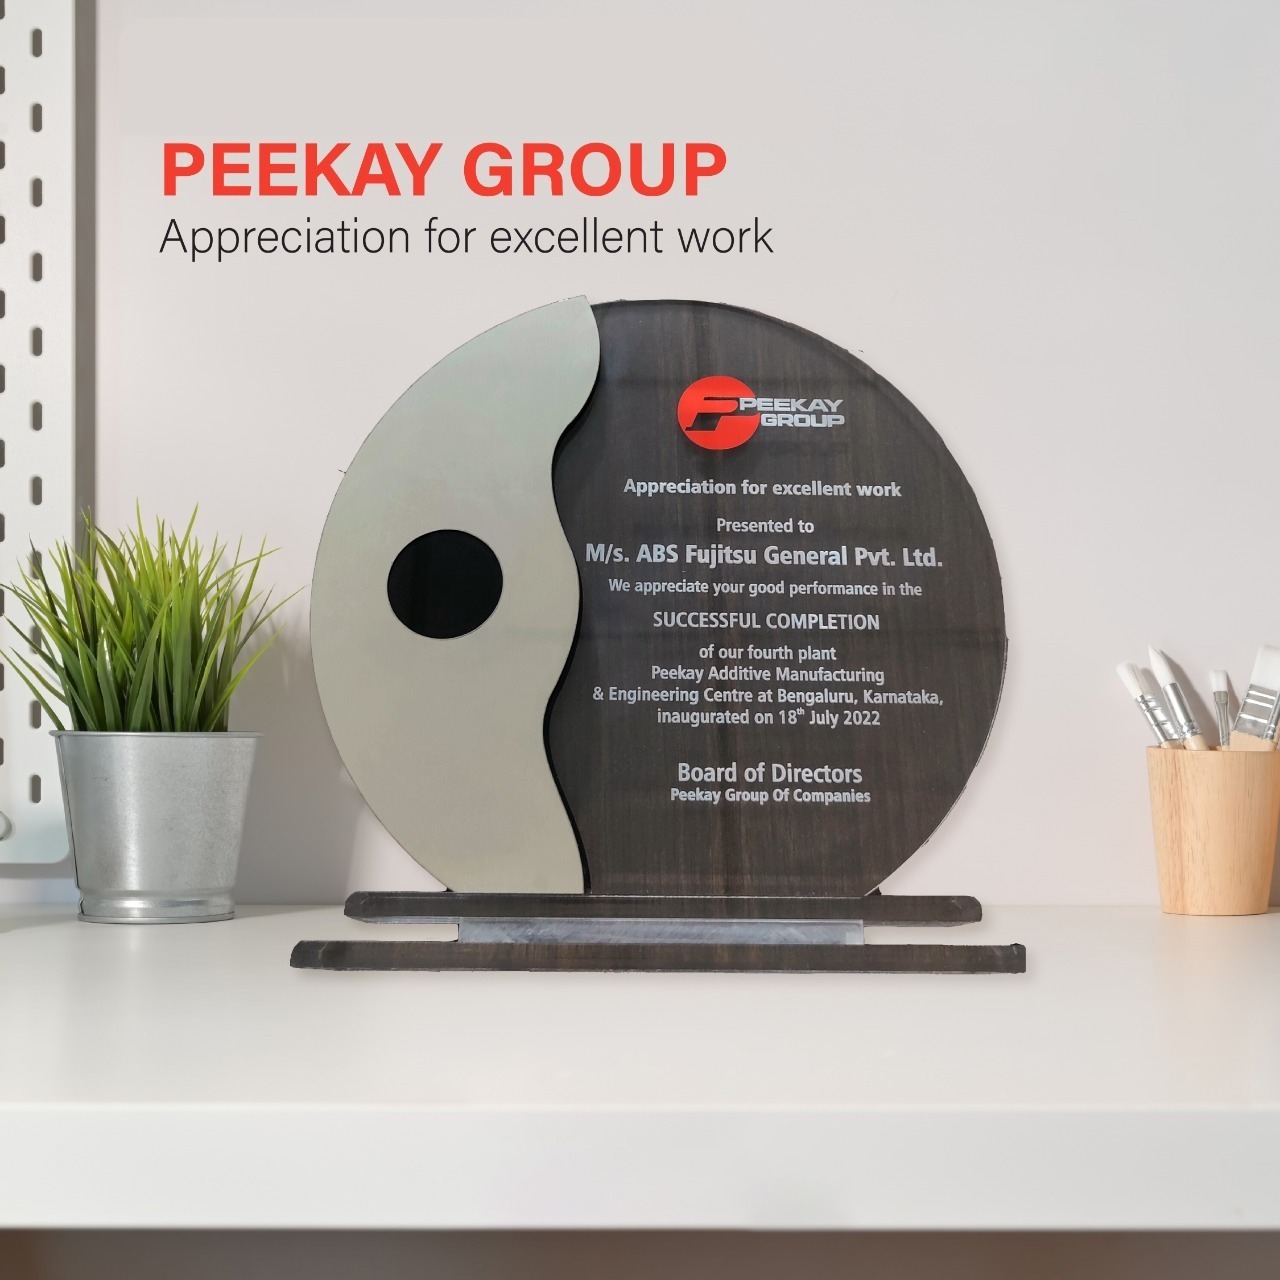 Peekay-Group-Award-ABS-Fujitsu-General